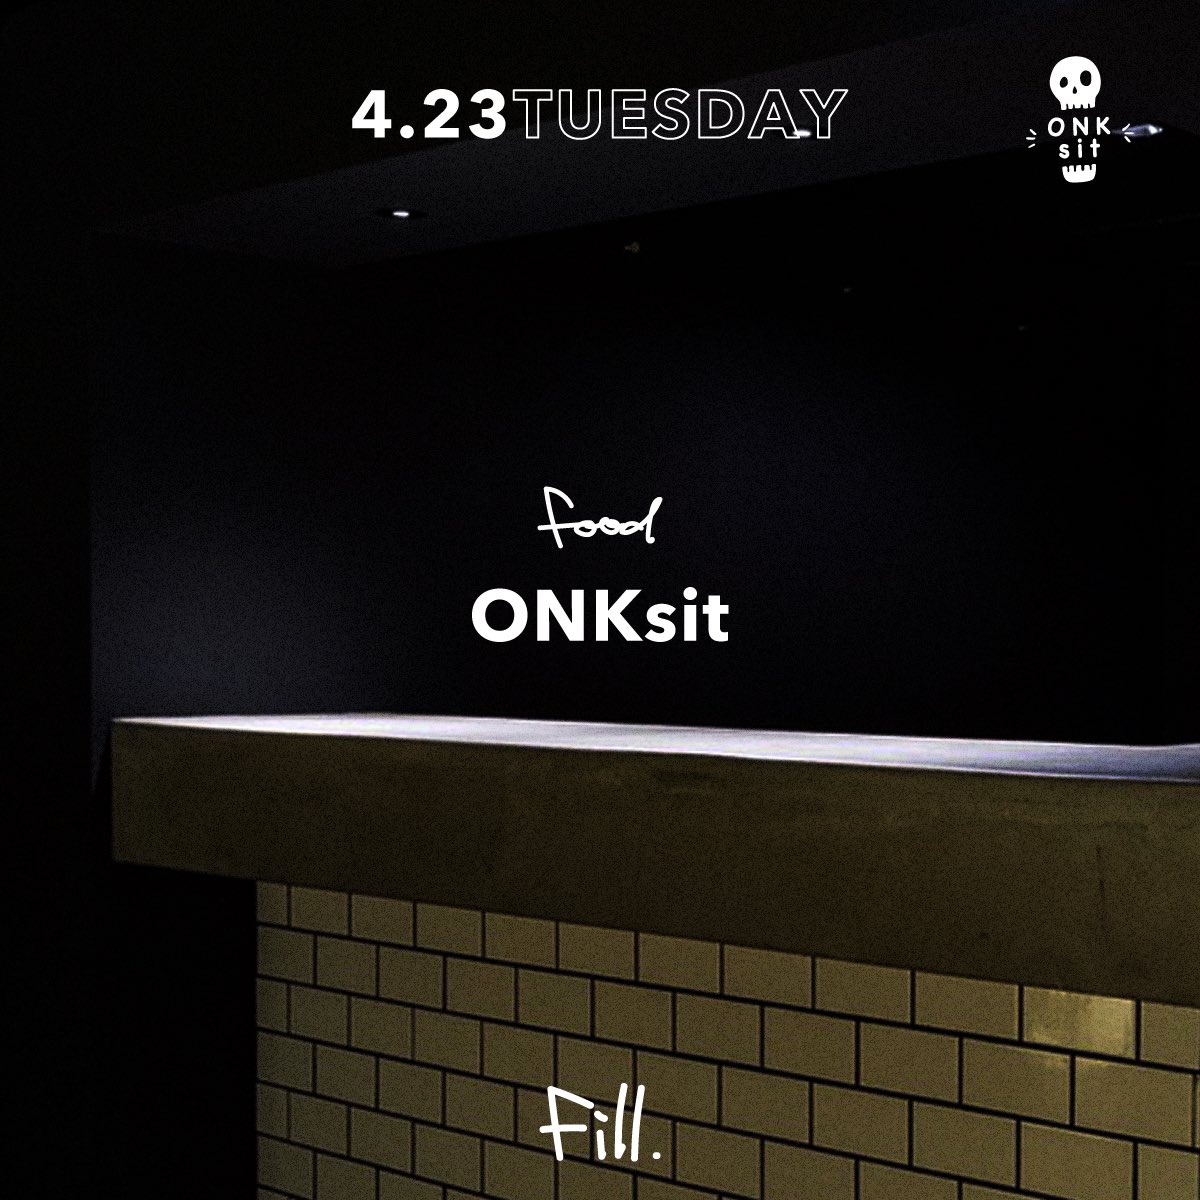 【TONIGHT】 4.23 TUE OPEN20:00 MUSIC CHARGE1000YEN -GUEST DJ- DJ SHIMPEI STN -DJS- DIRTY RIVER RECORDS FiLL FOOD ONKsit